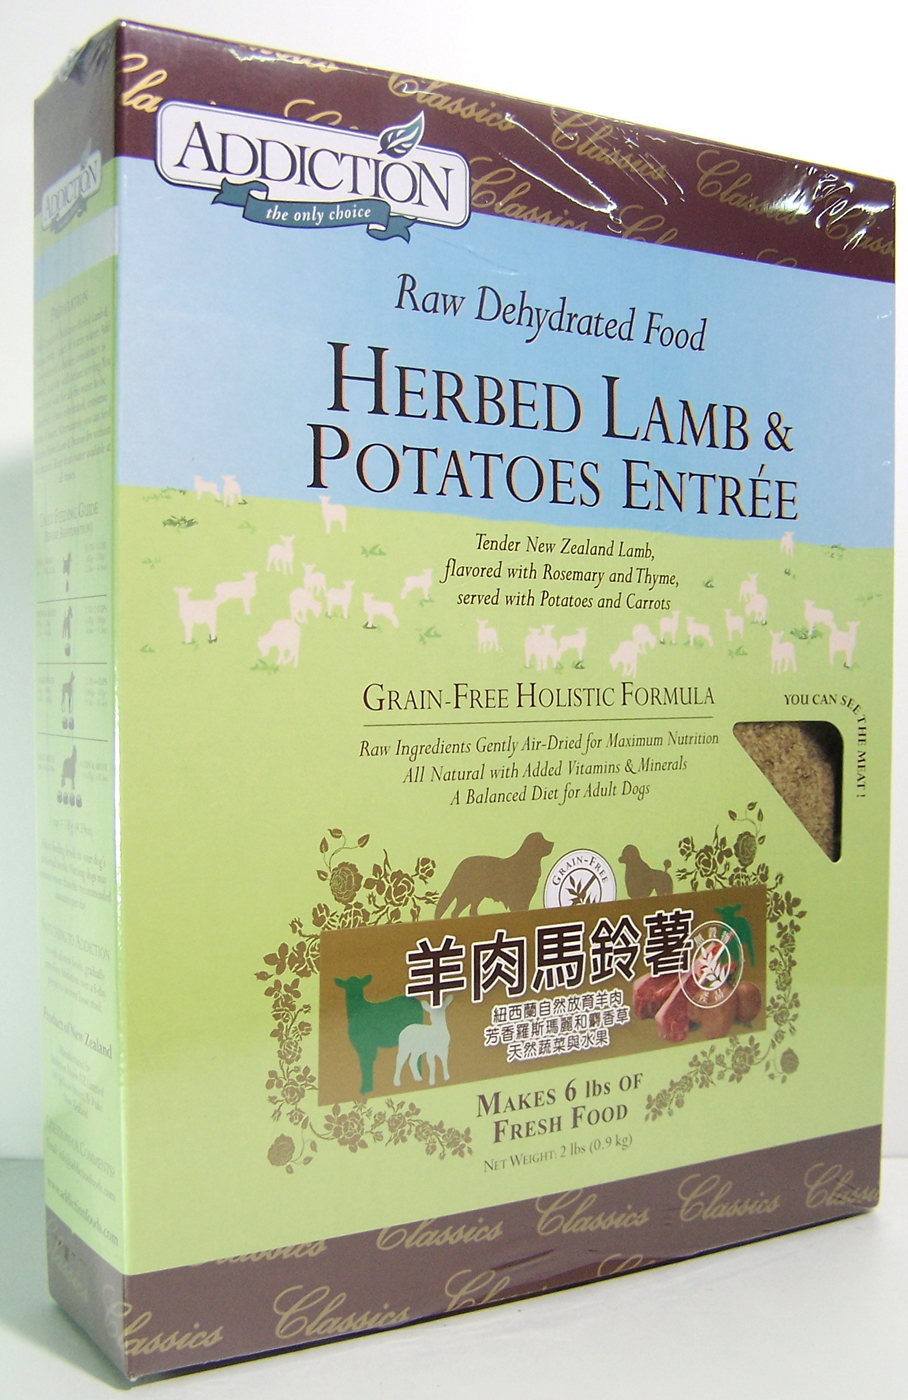 ADDICTION羊肉馬鈴薯脫水乾糧(8lbs/3.6kg)
Herbed Lamb & Potatoes - Grain-Free (8lbs x 3bags)